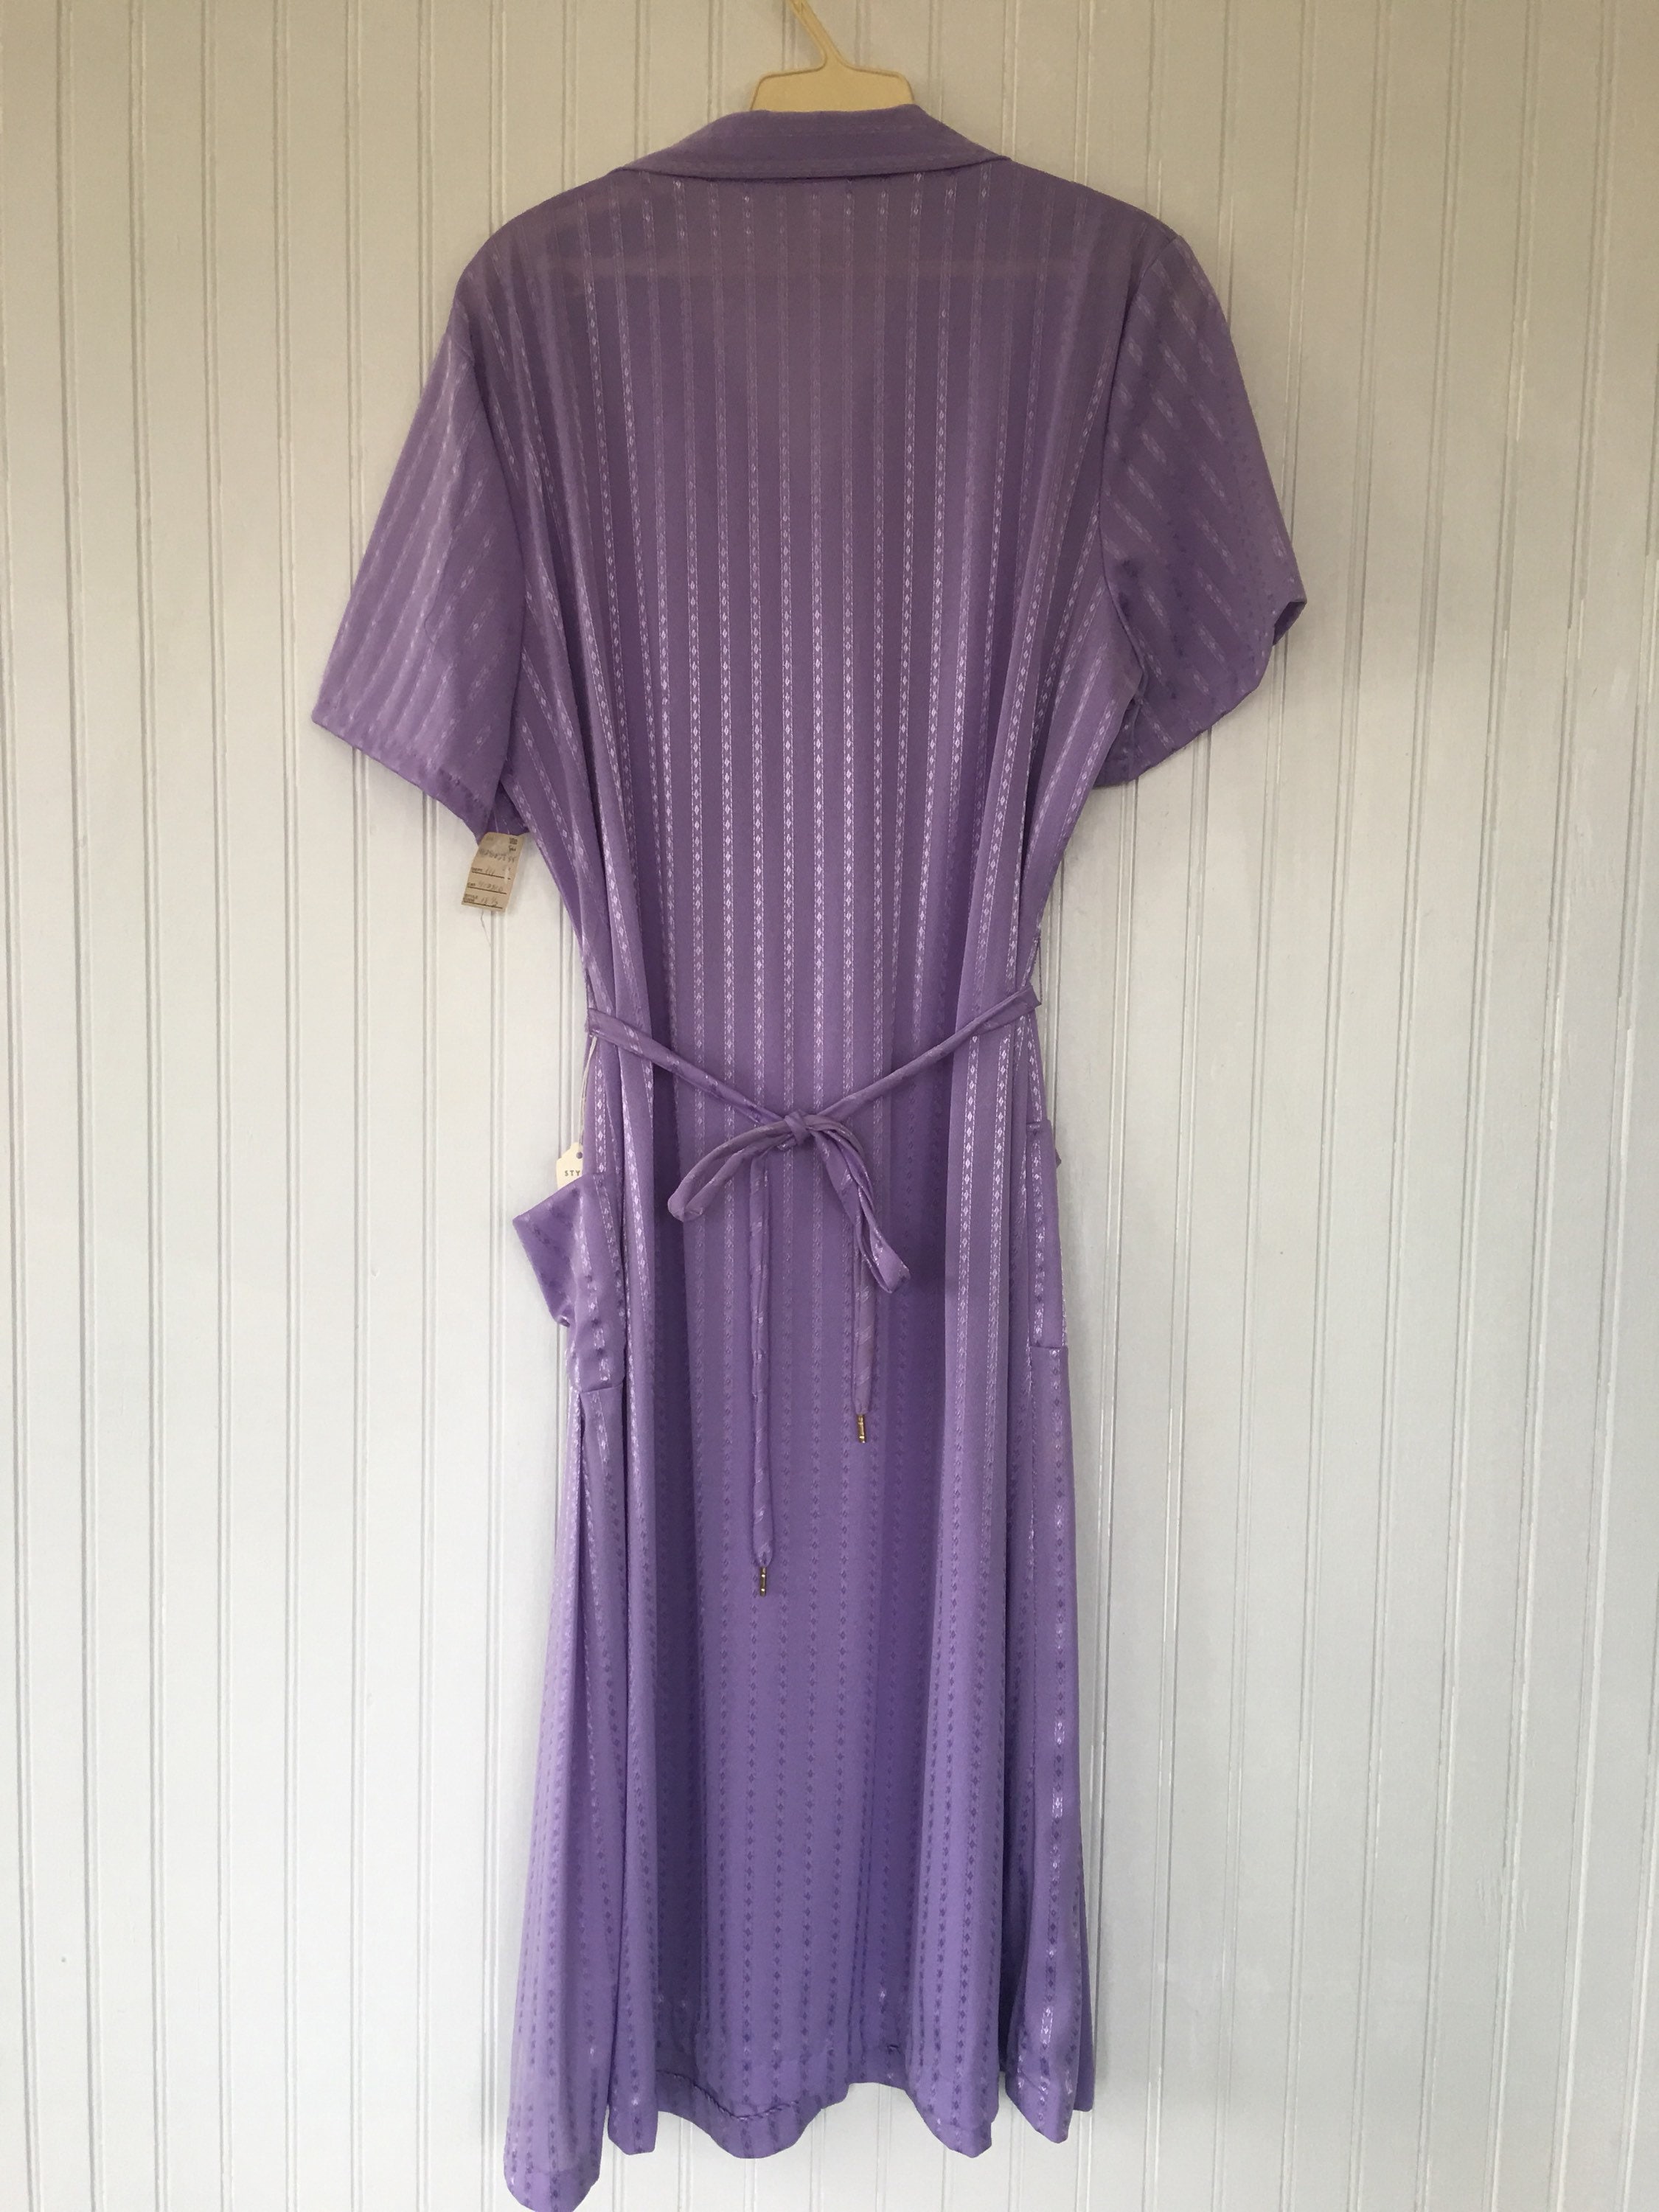 Vintage NWT 70s Pastel Purple Sheer Dress Size XL - Deadstock 1979 80s ...